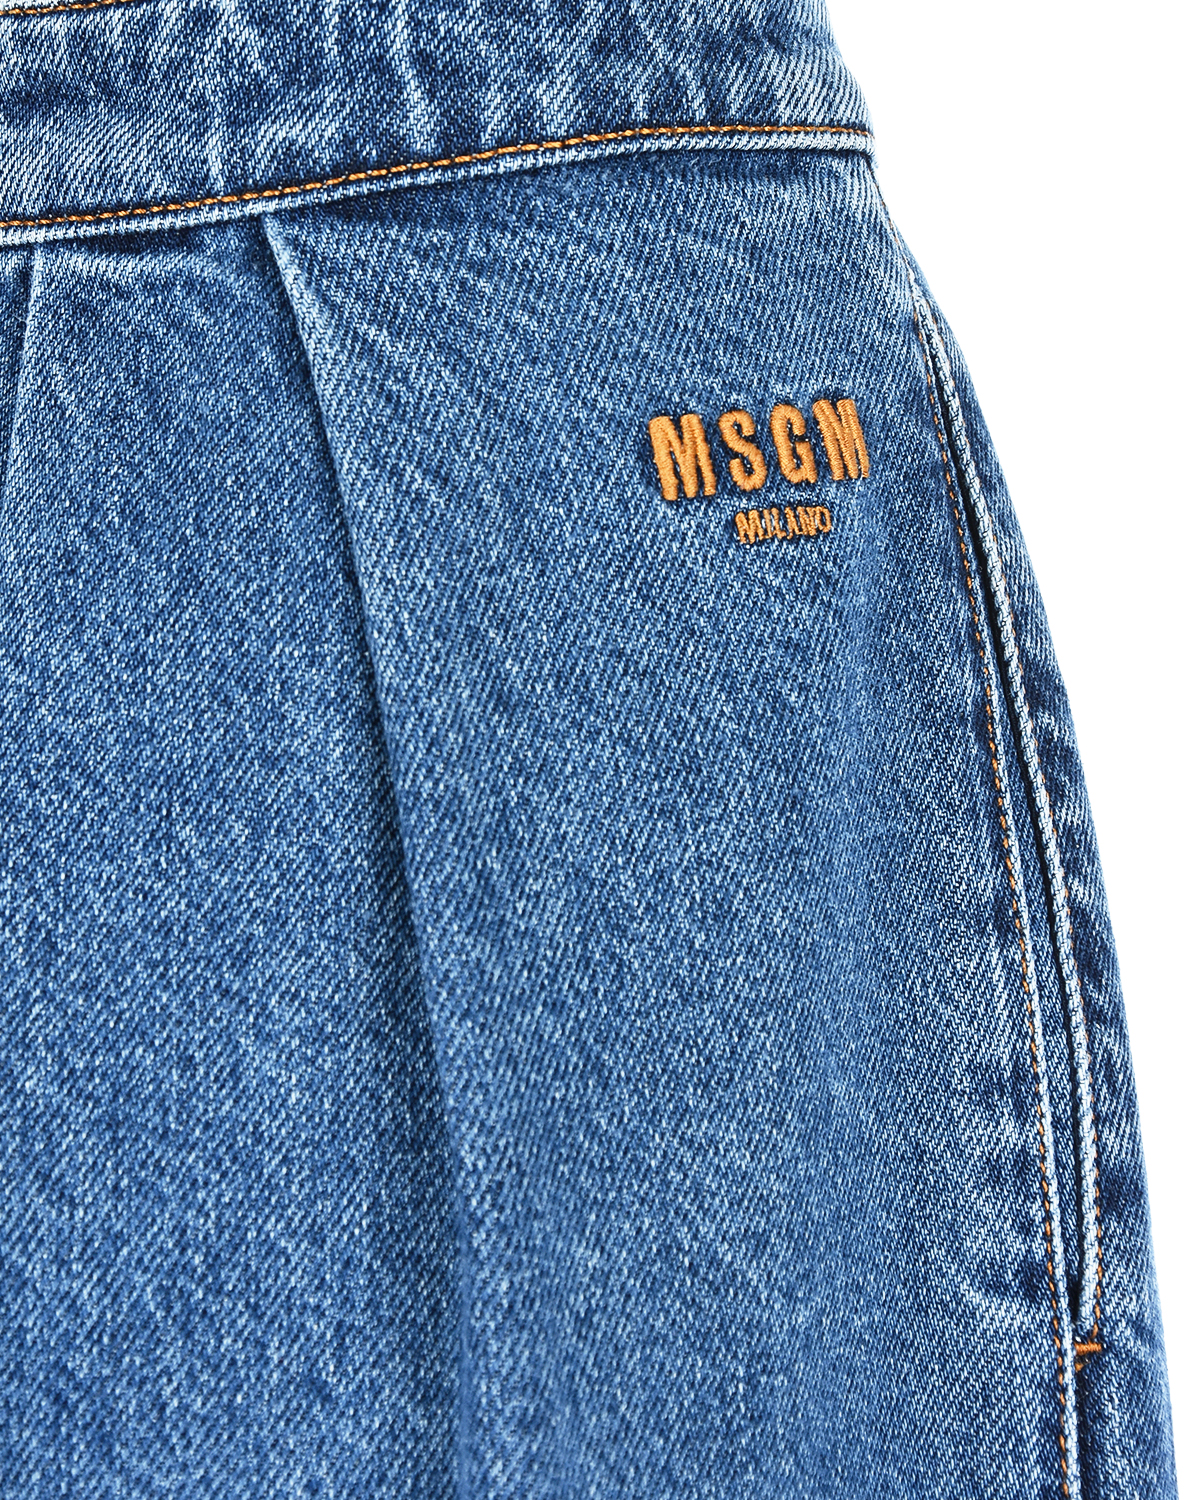 Синяя джинсовая юбка MSGM, размер 40, цвет синий - фото 7